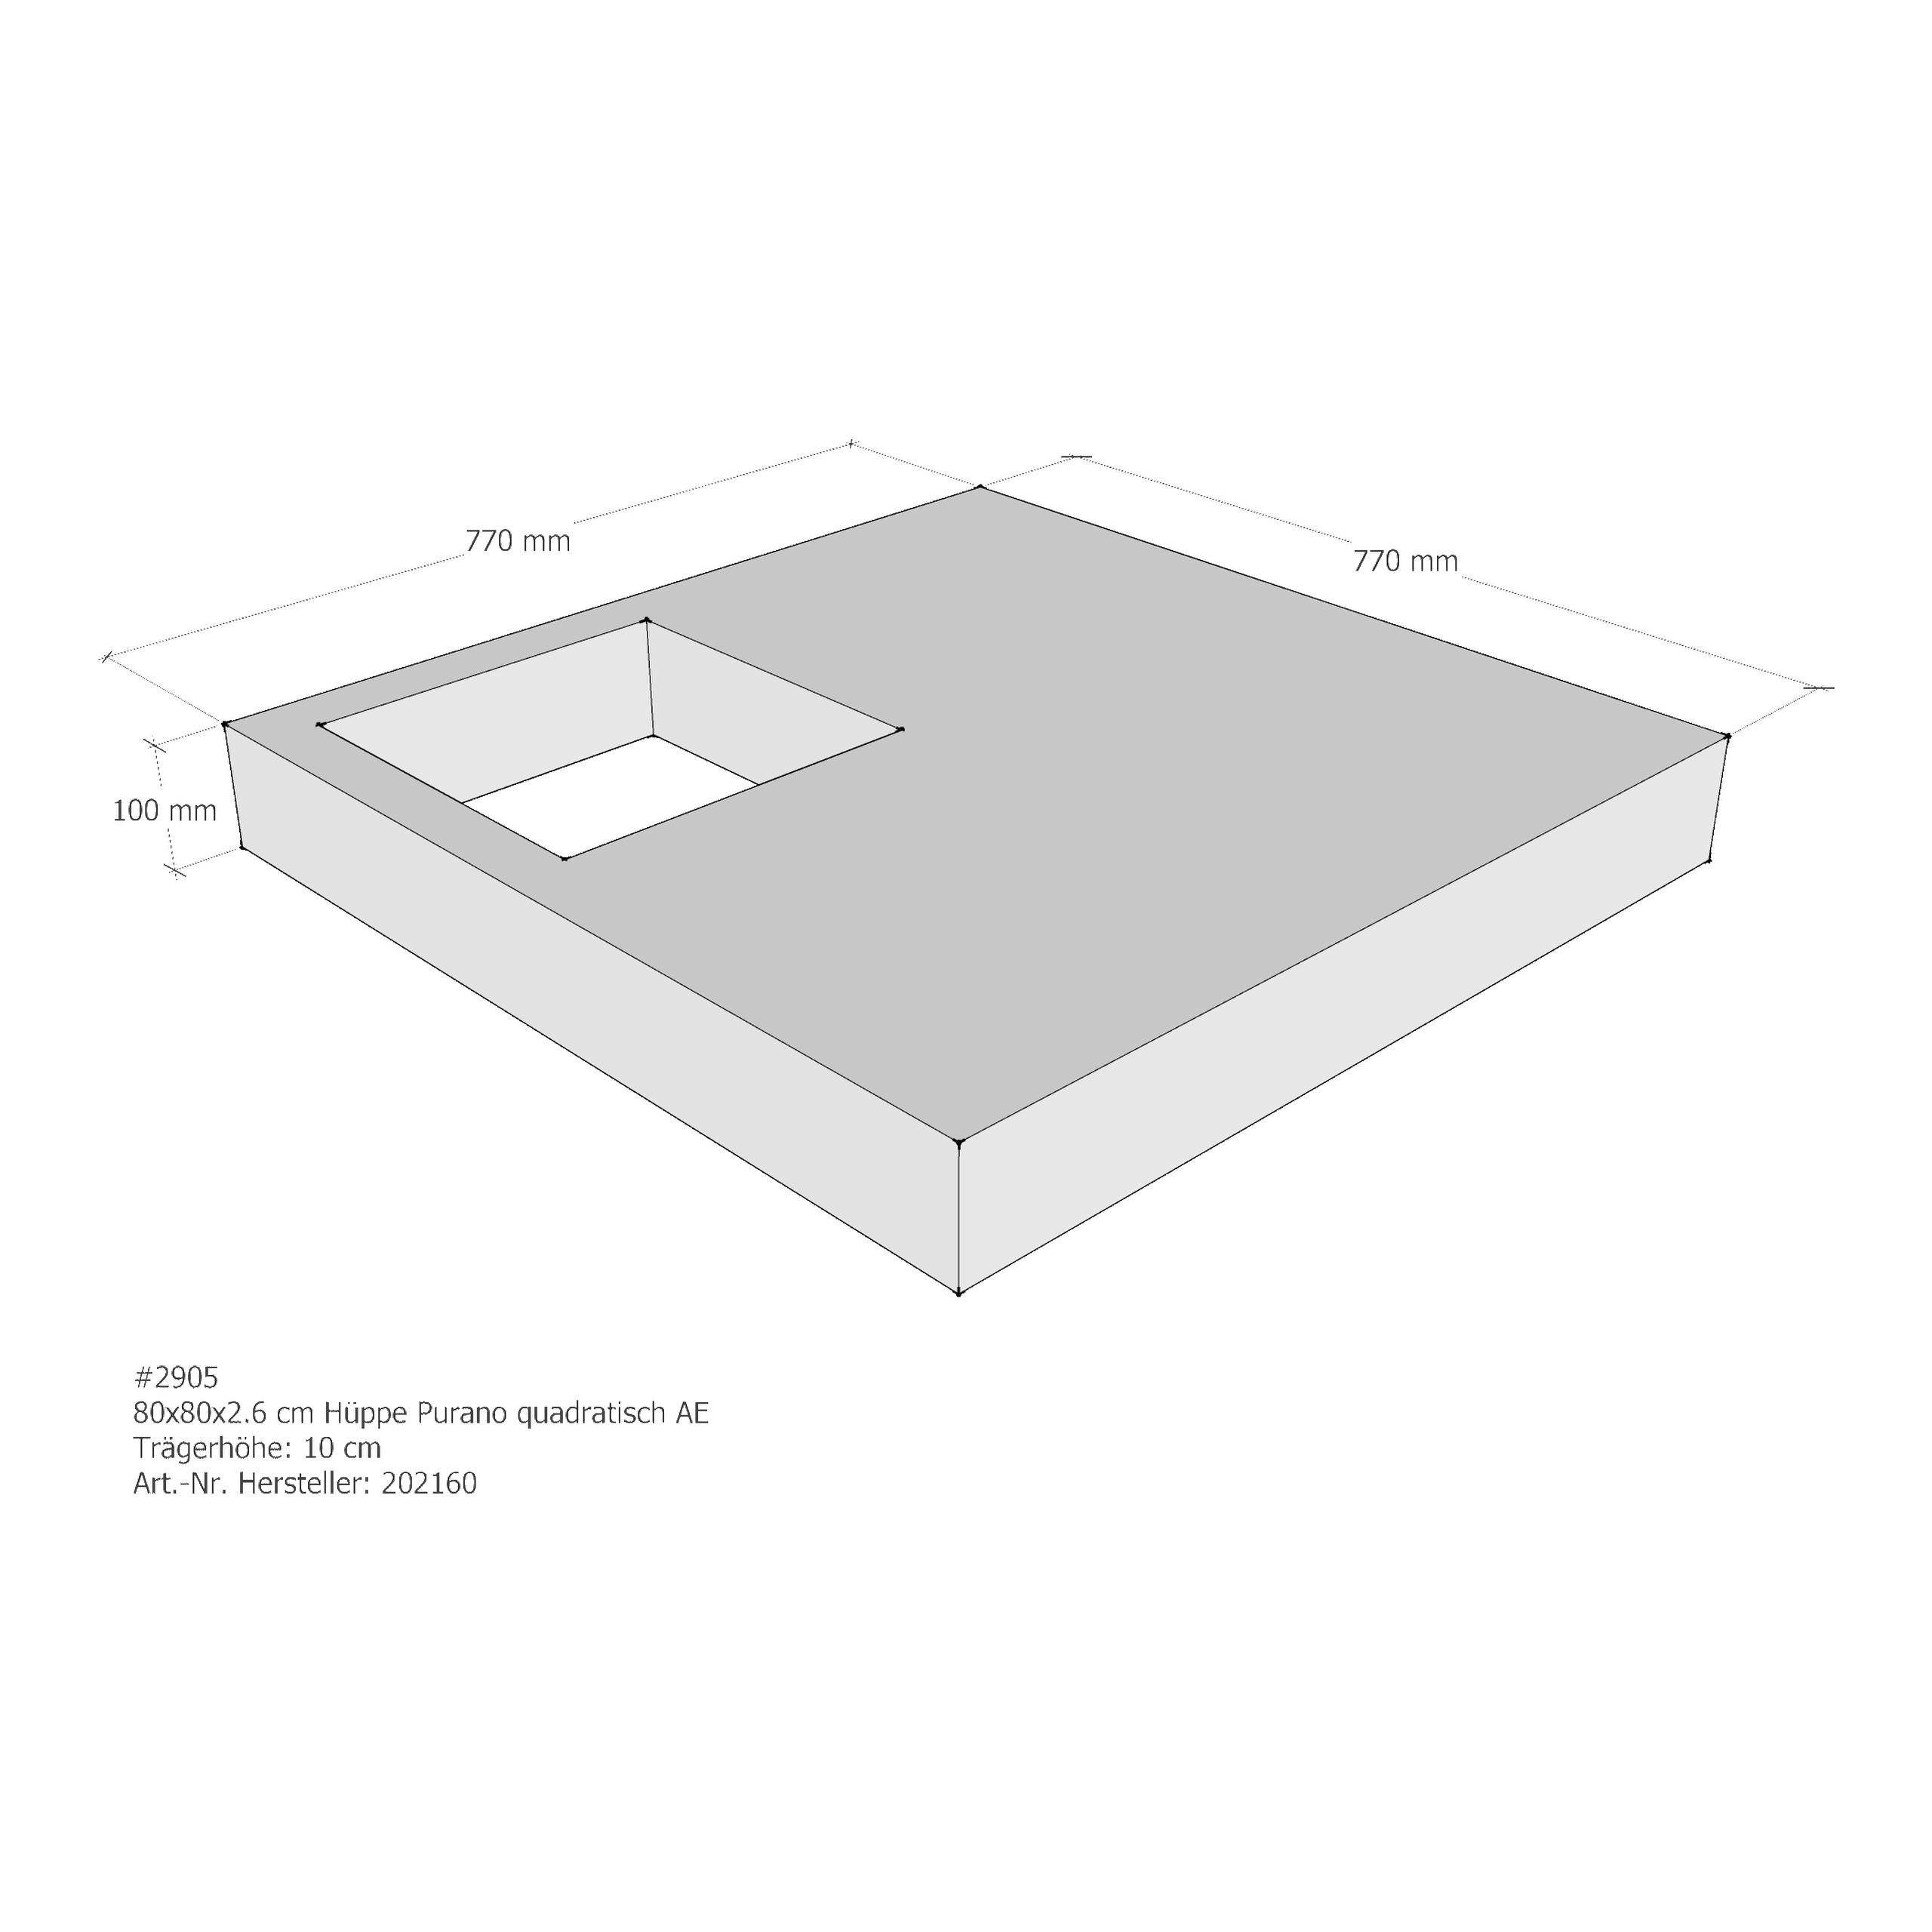 Duschwannenträger Hüppe Purano 80x80x2,6 cm quadratisch AE